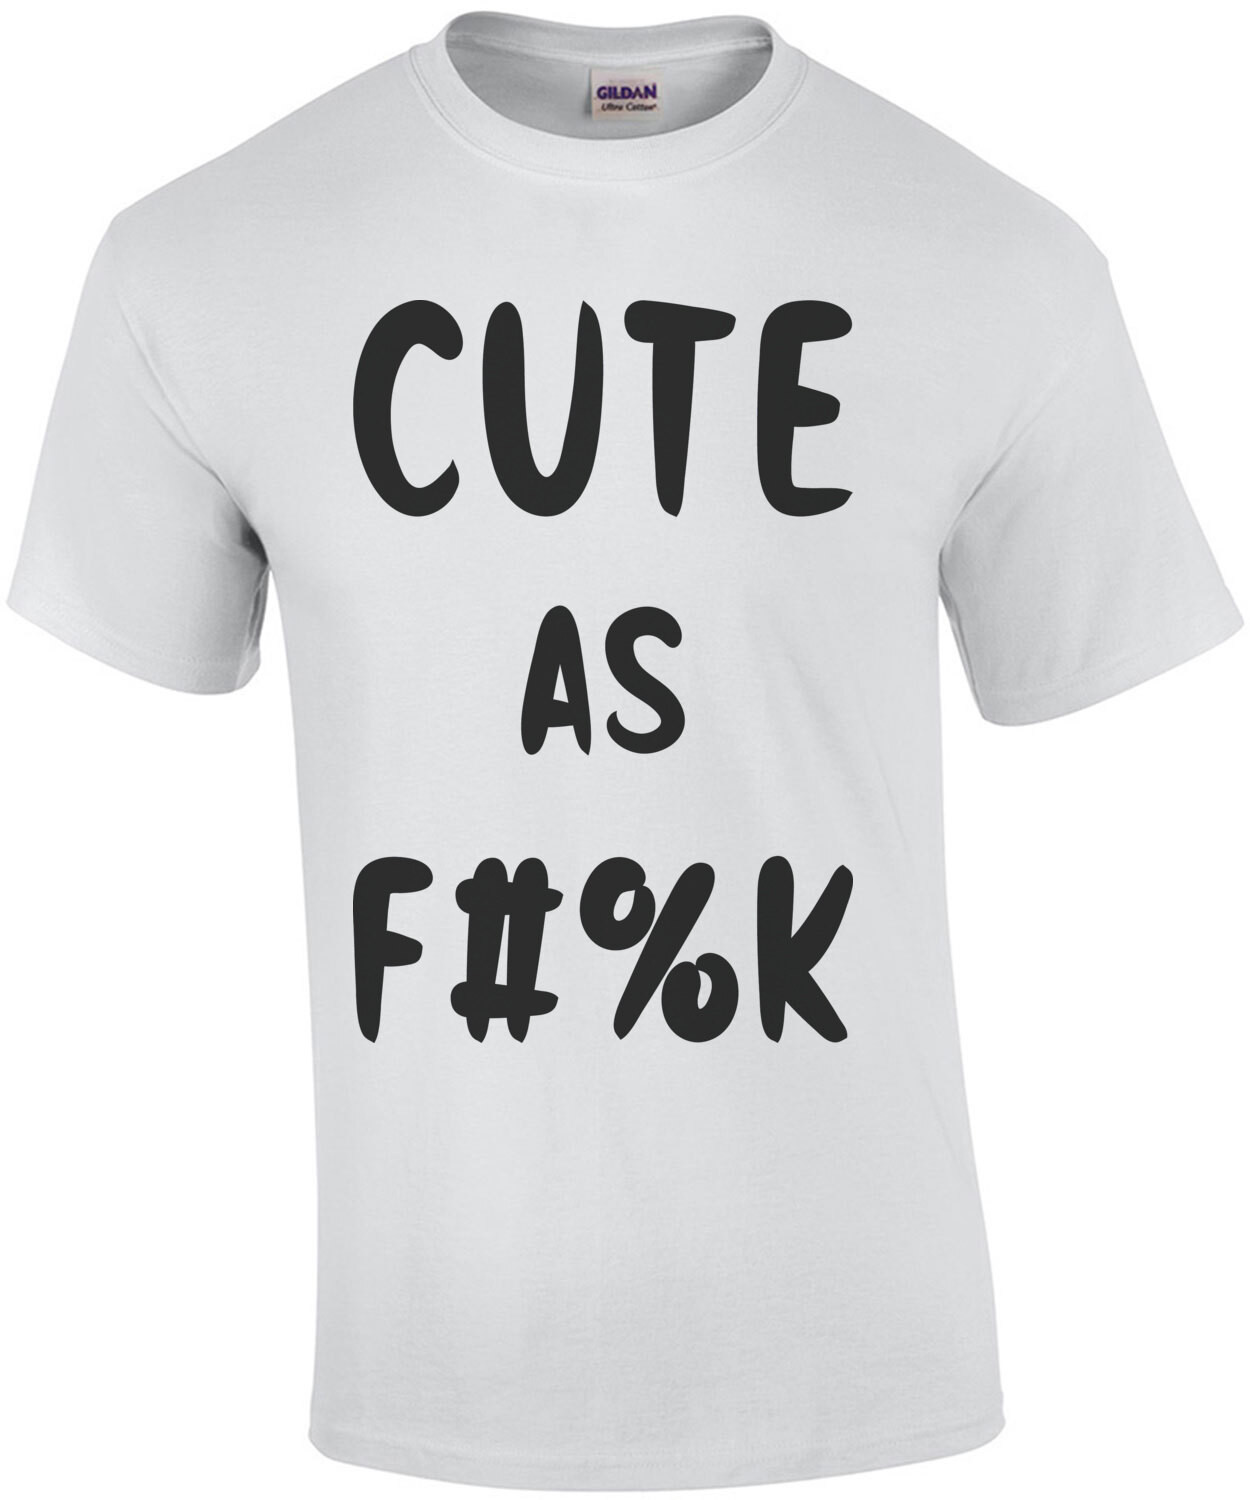 Cute As F#%k - funny ladies t-shirt